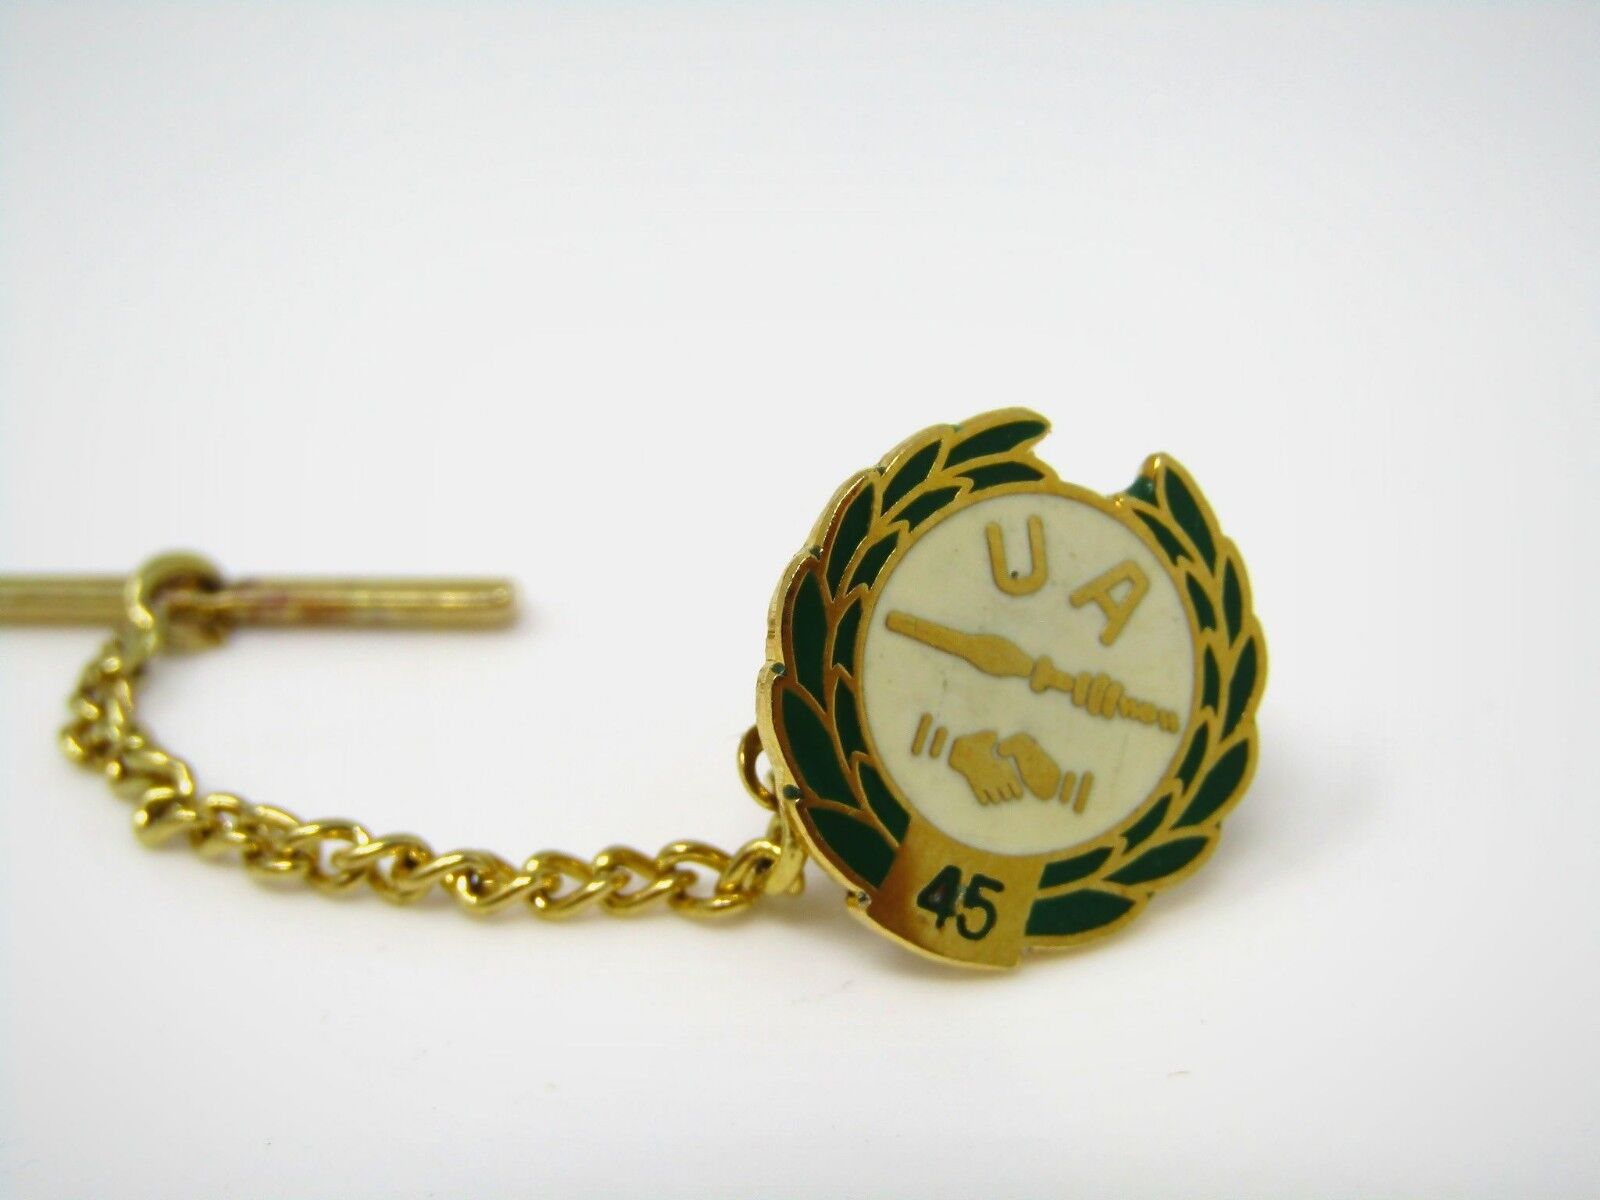 Vintage Collectible Pin: UA Union 45 Years Handshake Design